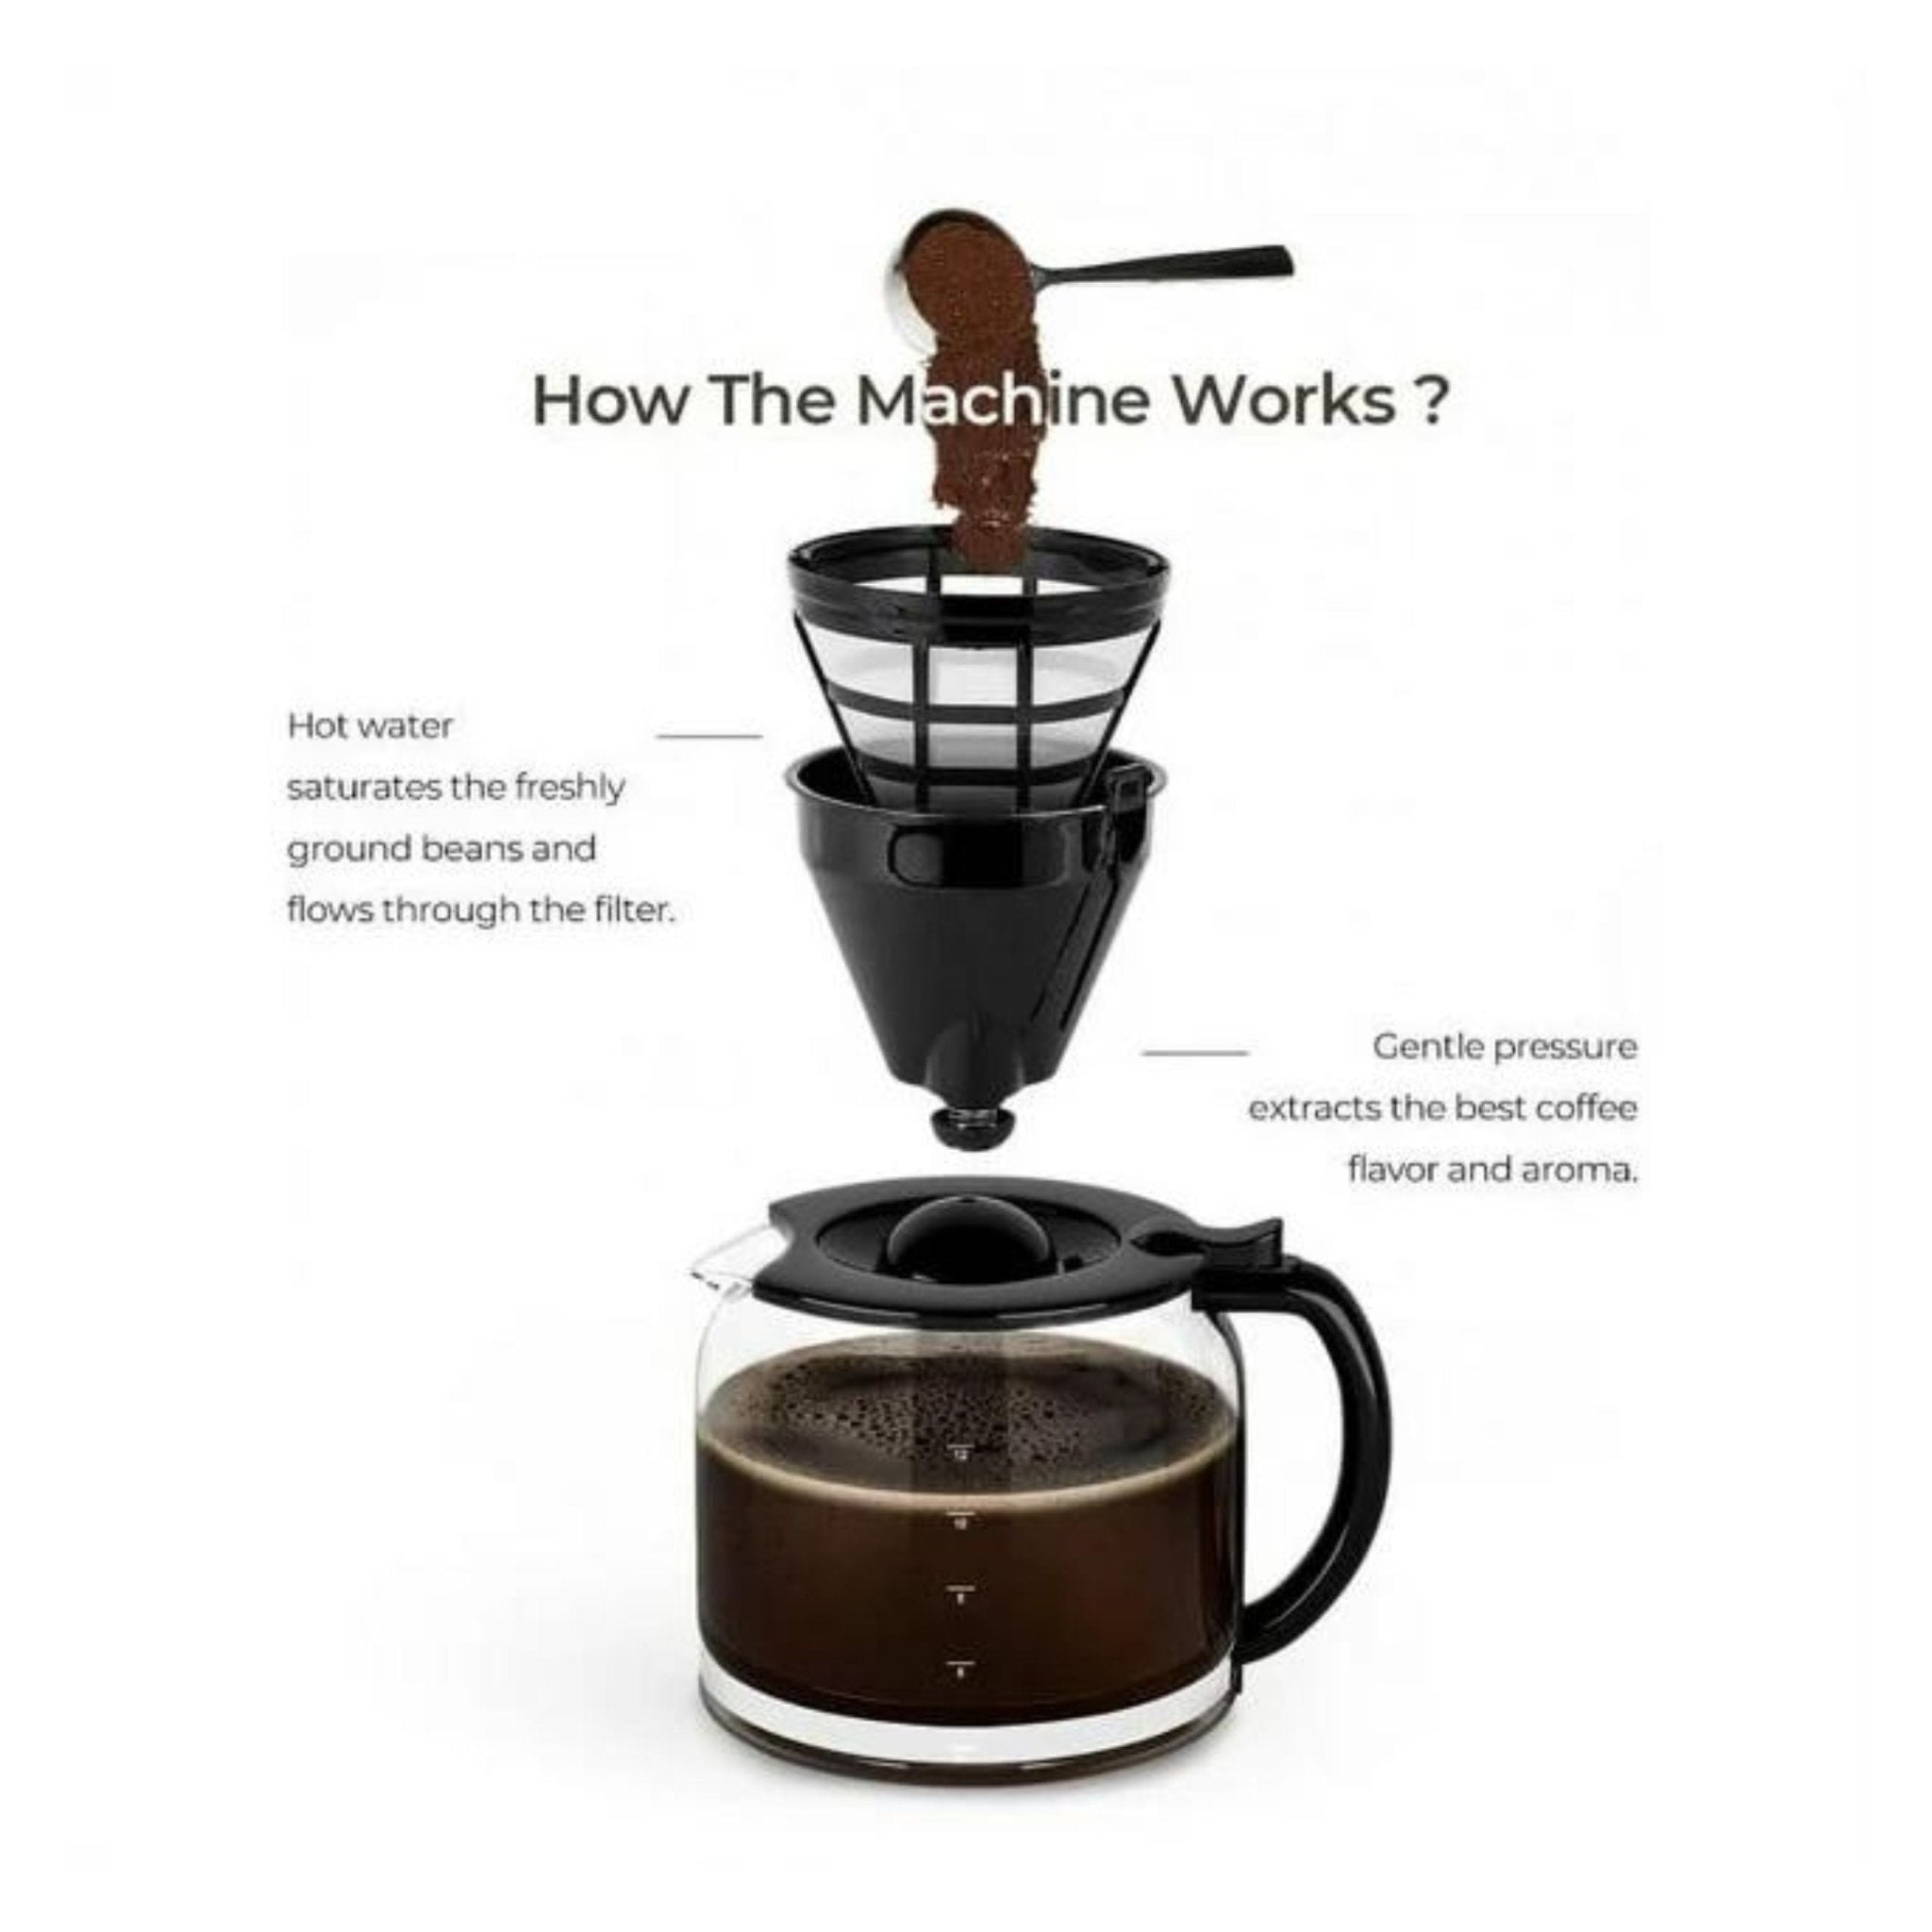 LePresso Drip Coffee Maker with Glass Carafe 1.5L 900W (LPCMDGBK) - Black